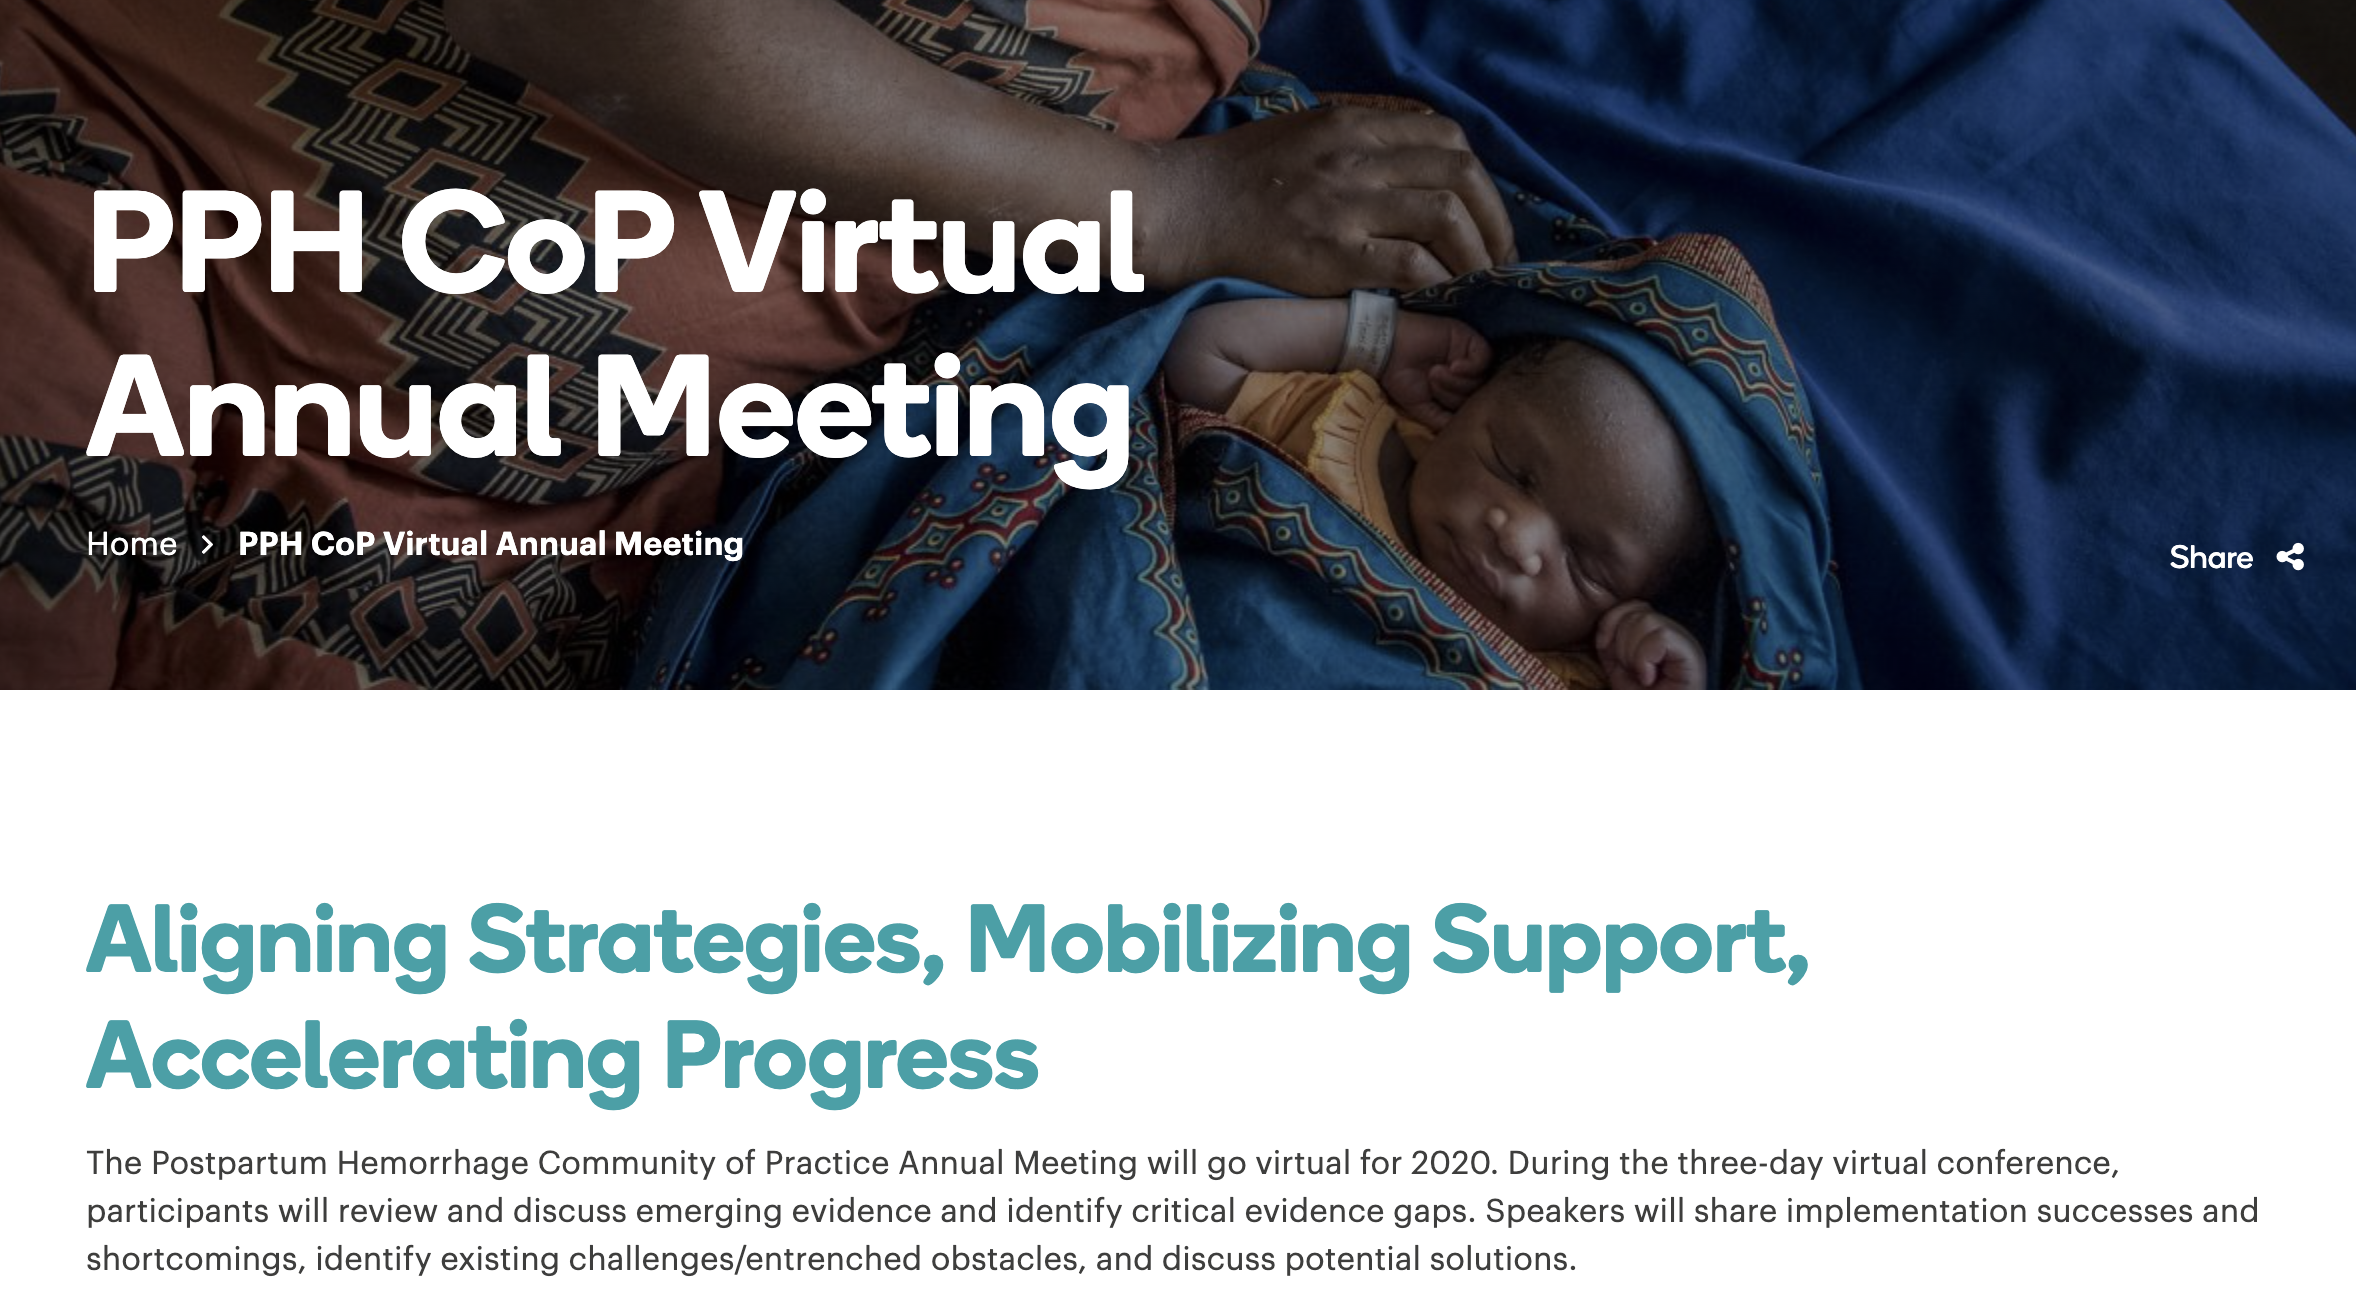 The Postpartum Hemorrhage Community of Practice Annual Meeting 2020